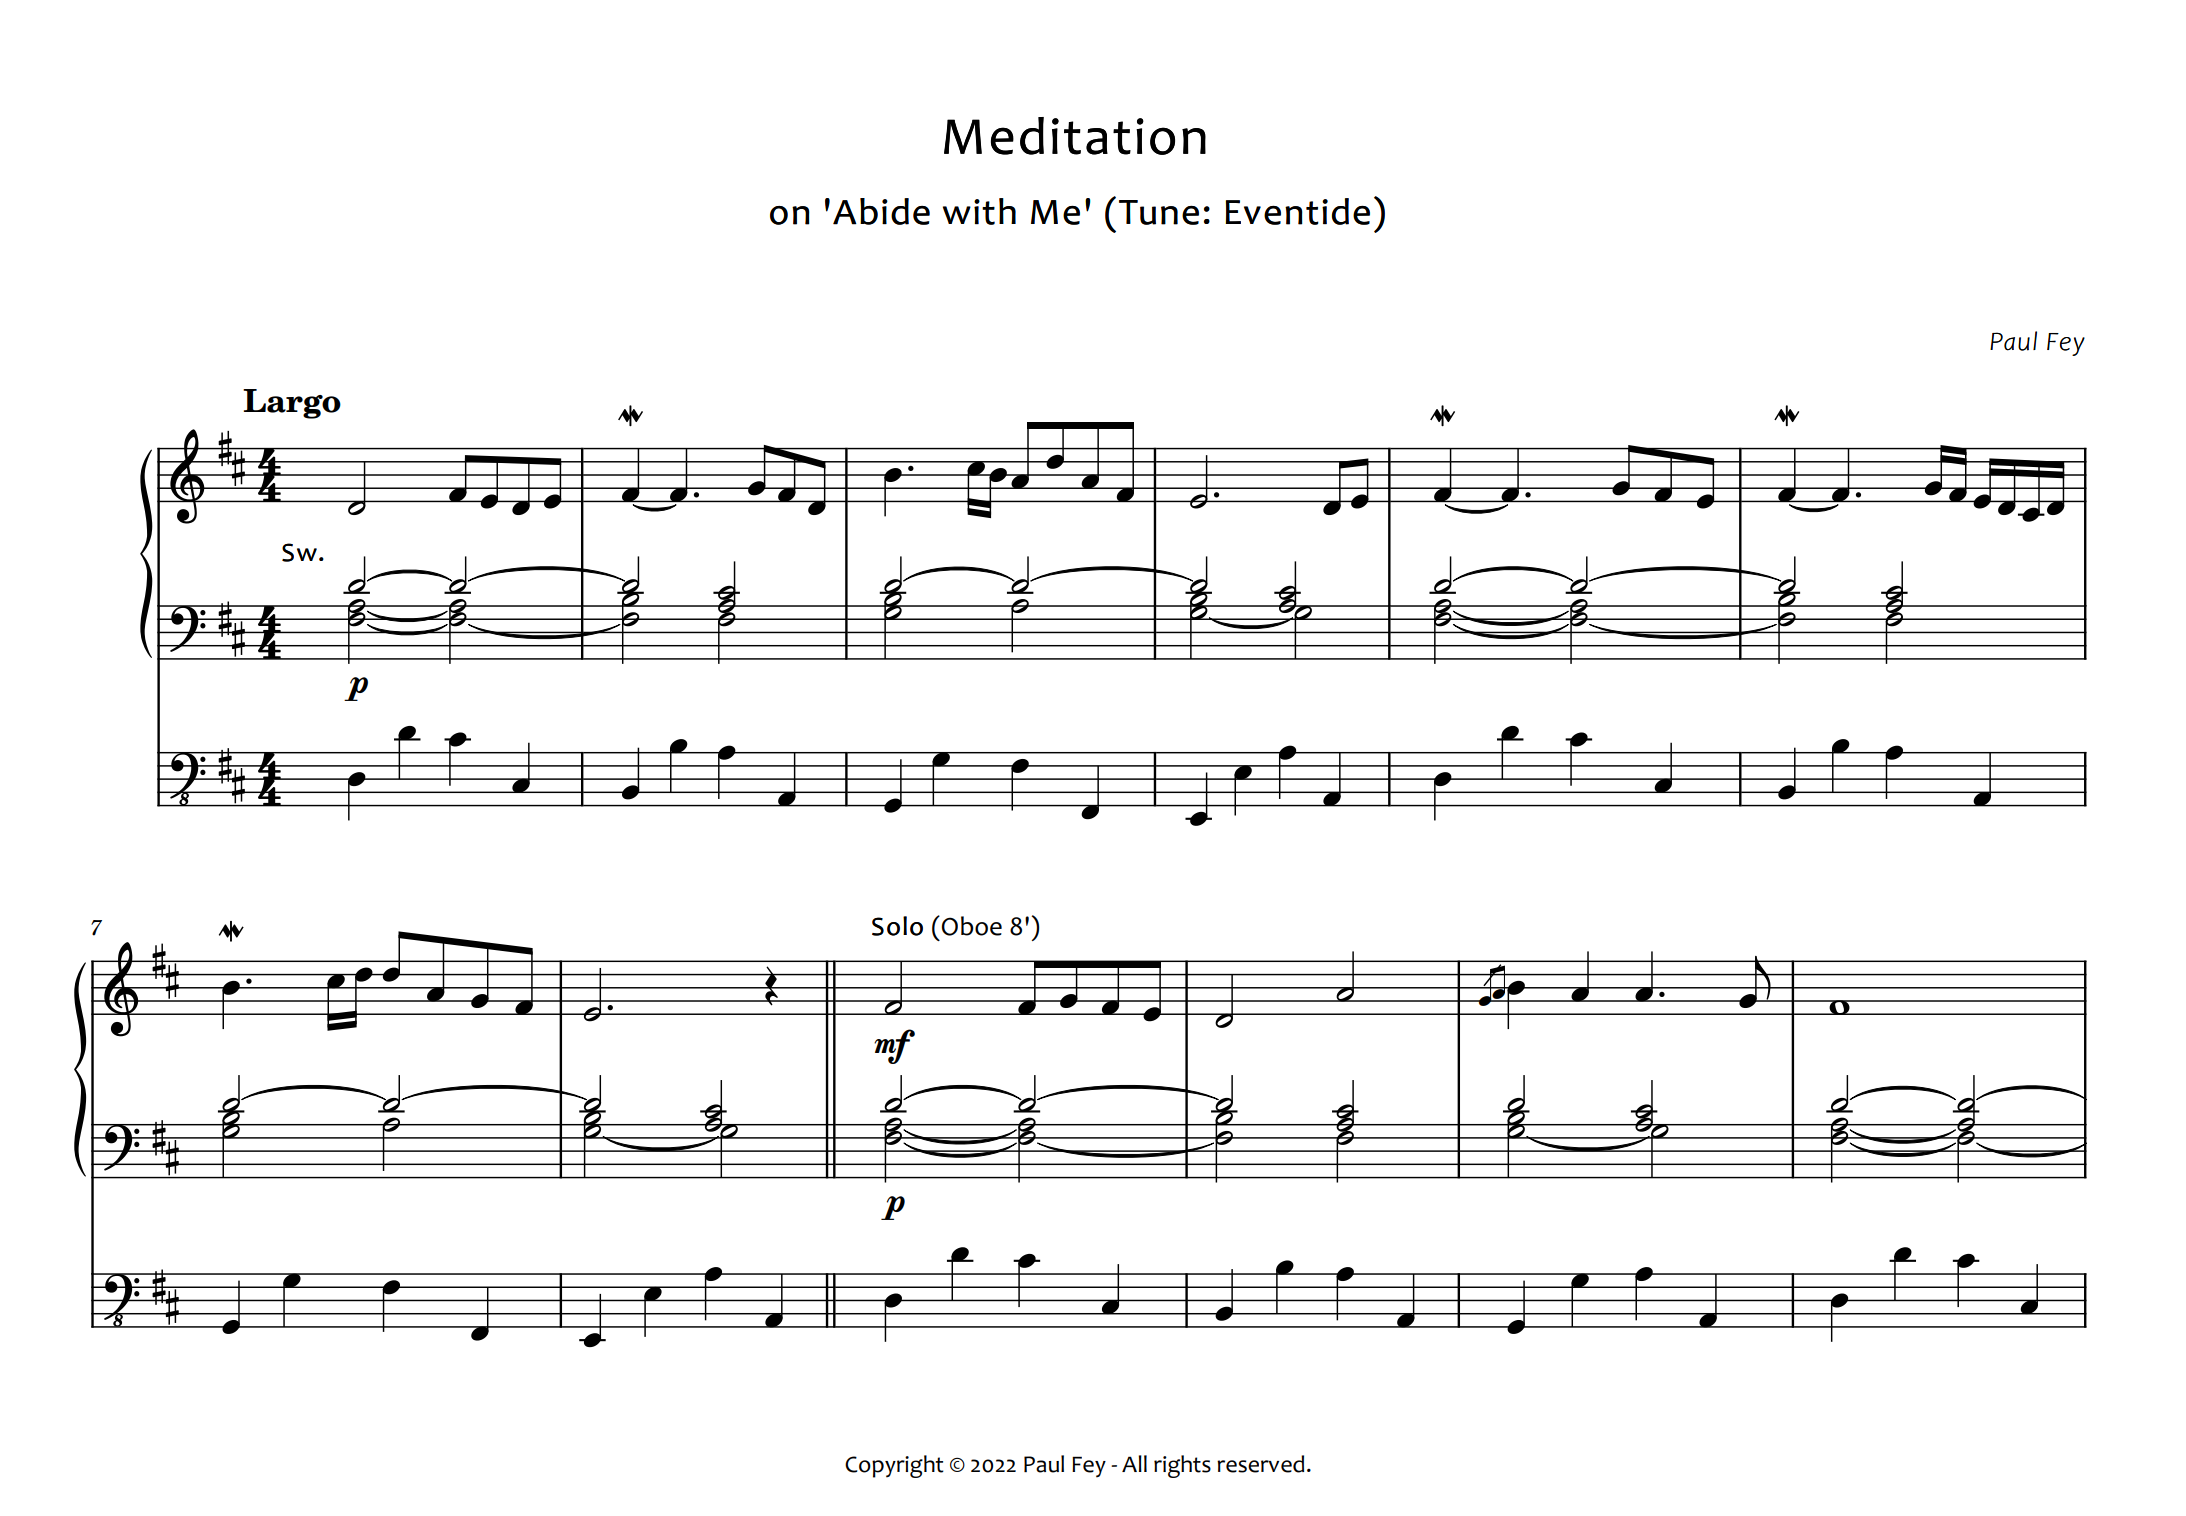 Dutch Meditation on 'Abide with me' - Music for Organ By Paul Fey